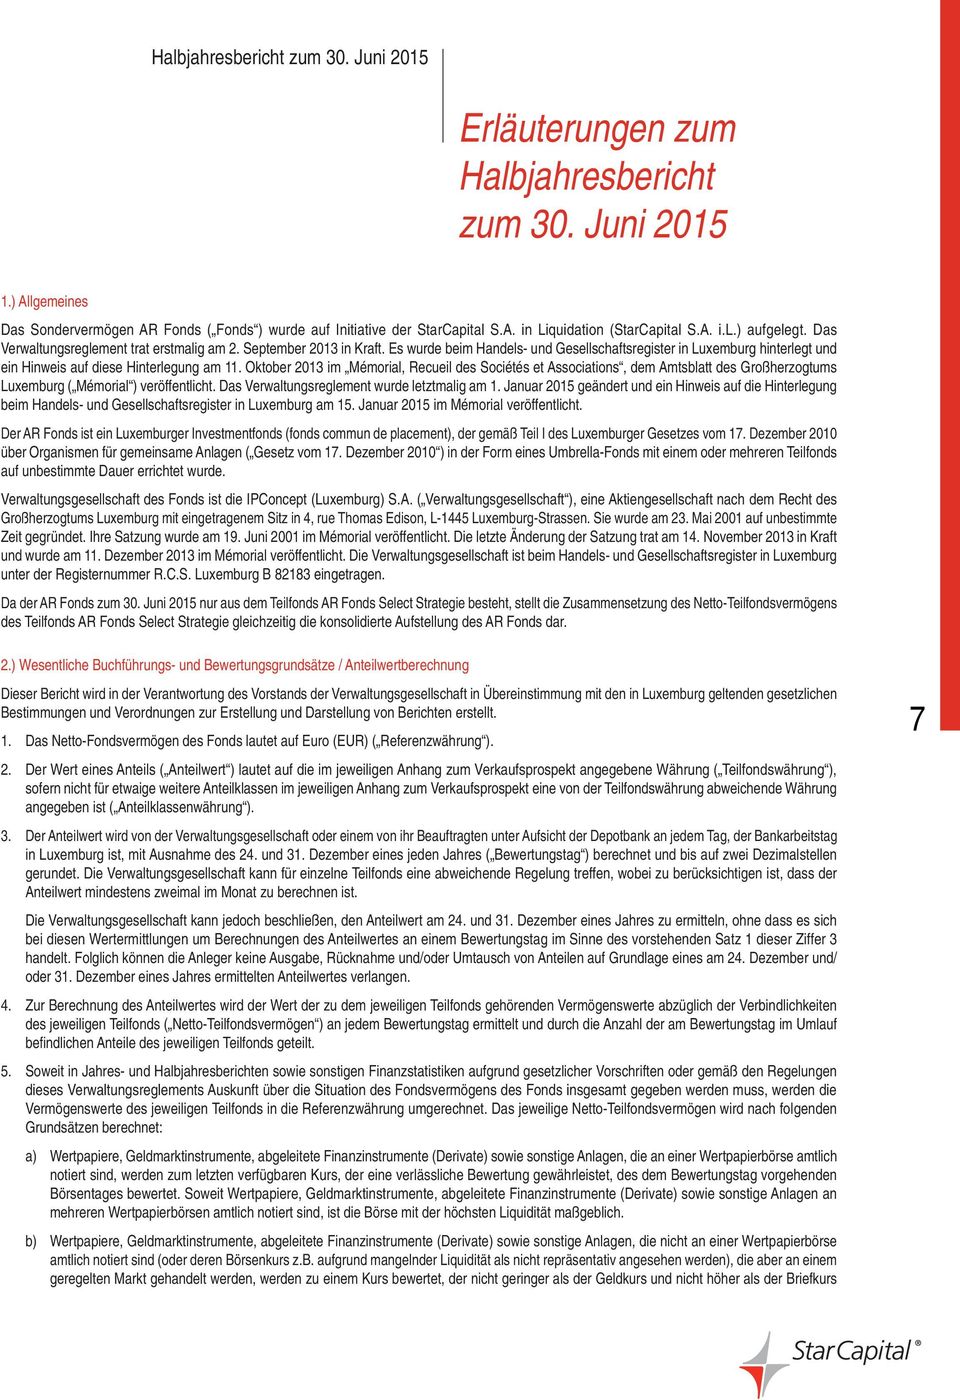 Oktober 2013 im Mémorial, Recueil des Sociétés et Associations, dem Amtsblatt des Großherzogtums Luxemburg ( Mémorial ) veröffentlicht. Das Verwaltungsreglement wurde letztmalig am 1.